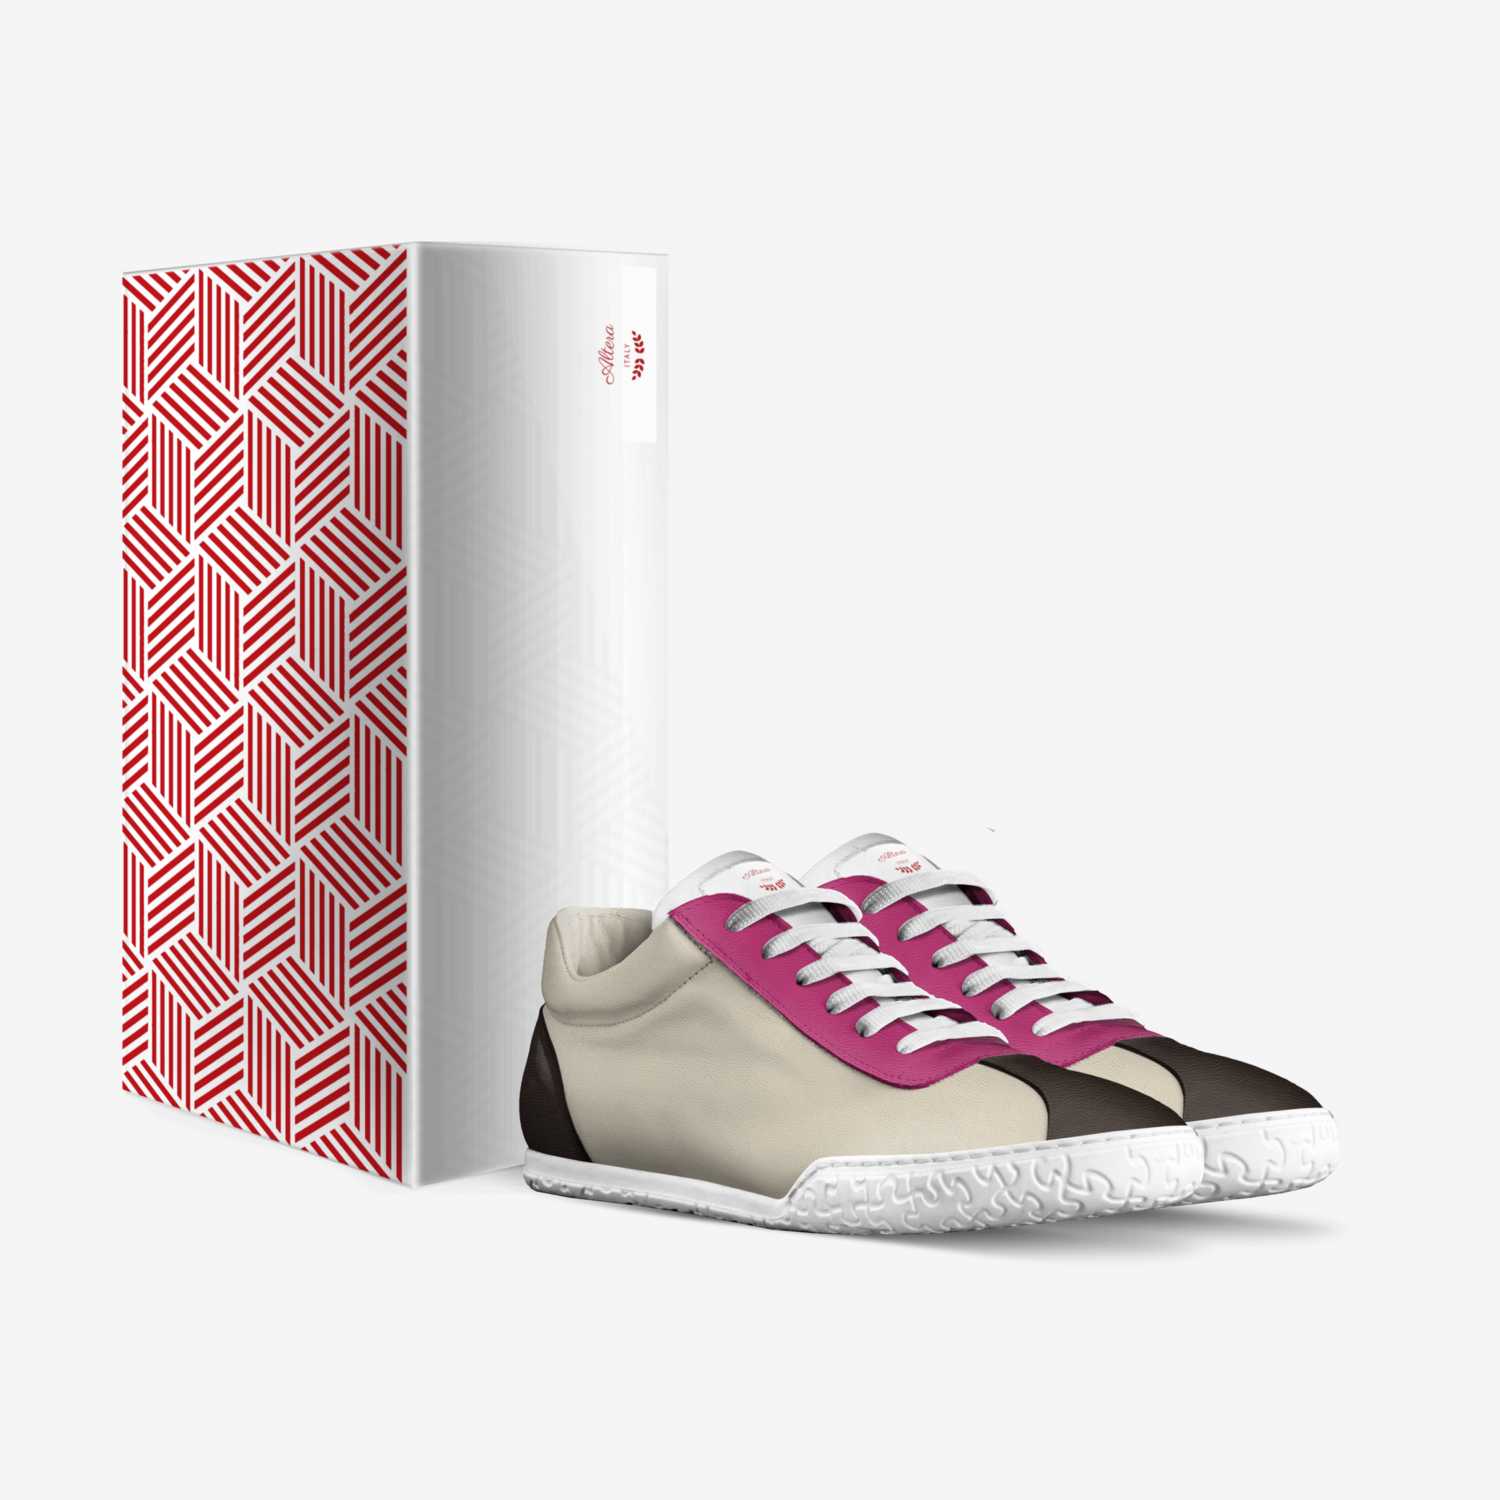 Altera custom made in Italy shoes by Maui Dalton | Box view